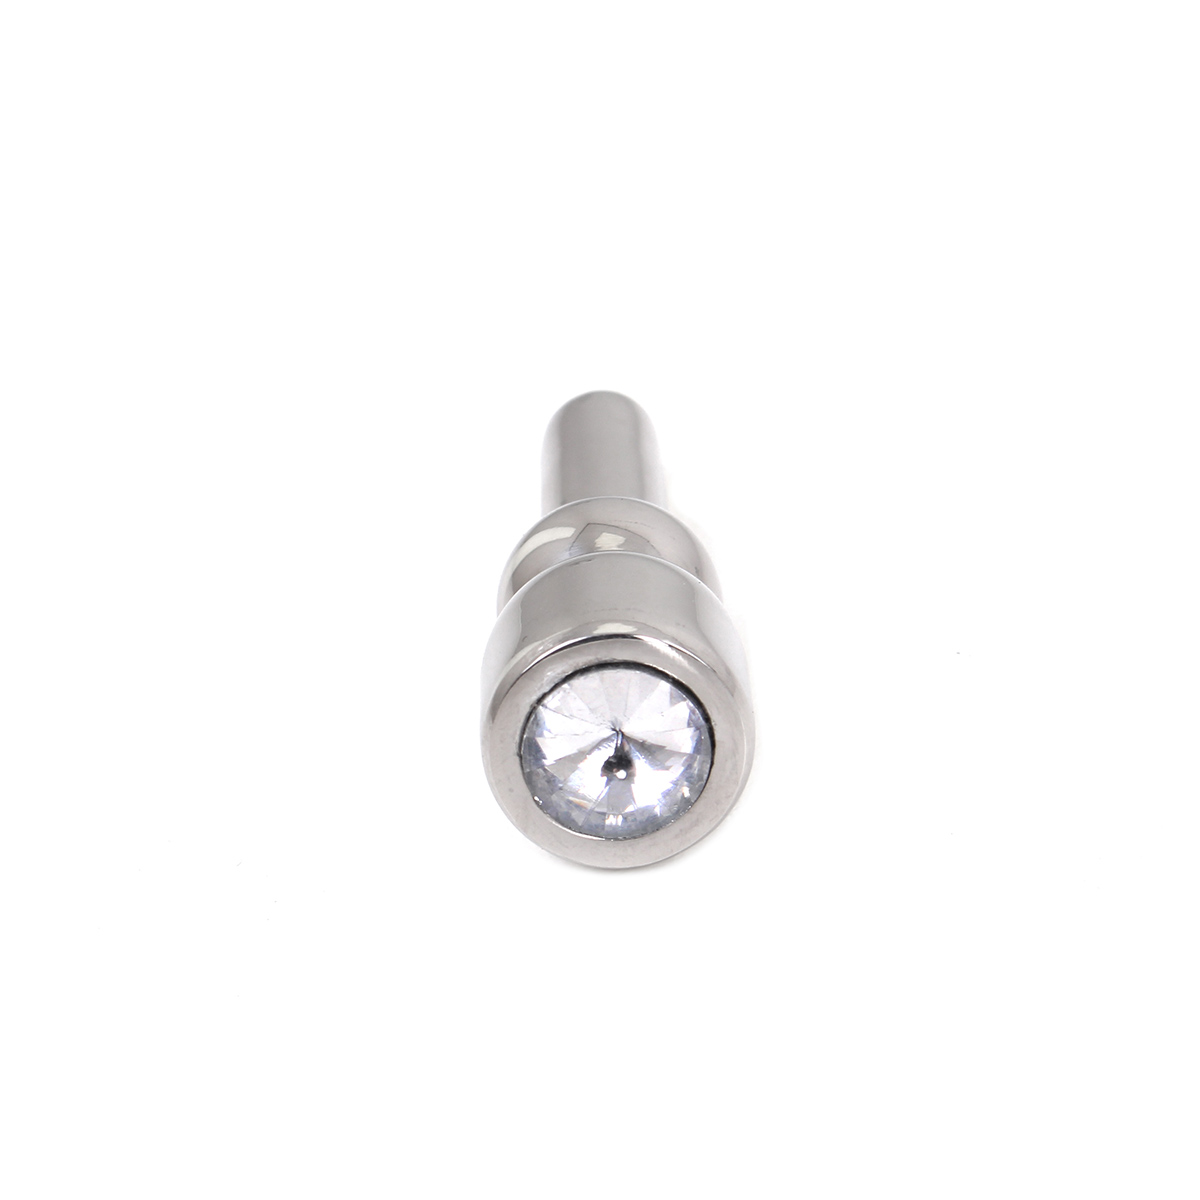 The-Bead-Mini-with-Jewel-Plug-OPR-2960089-3